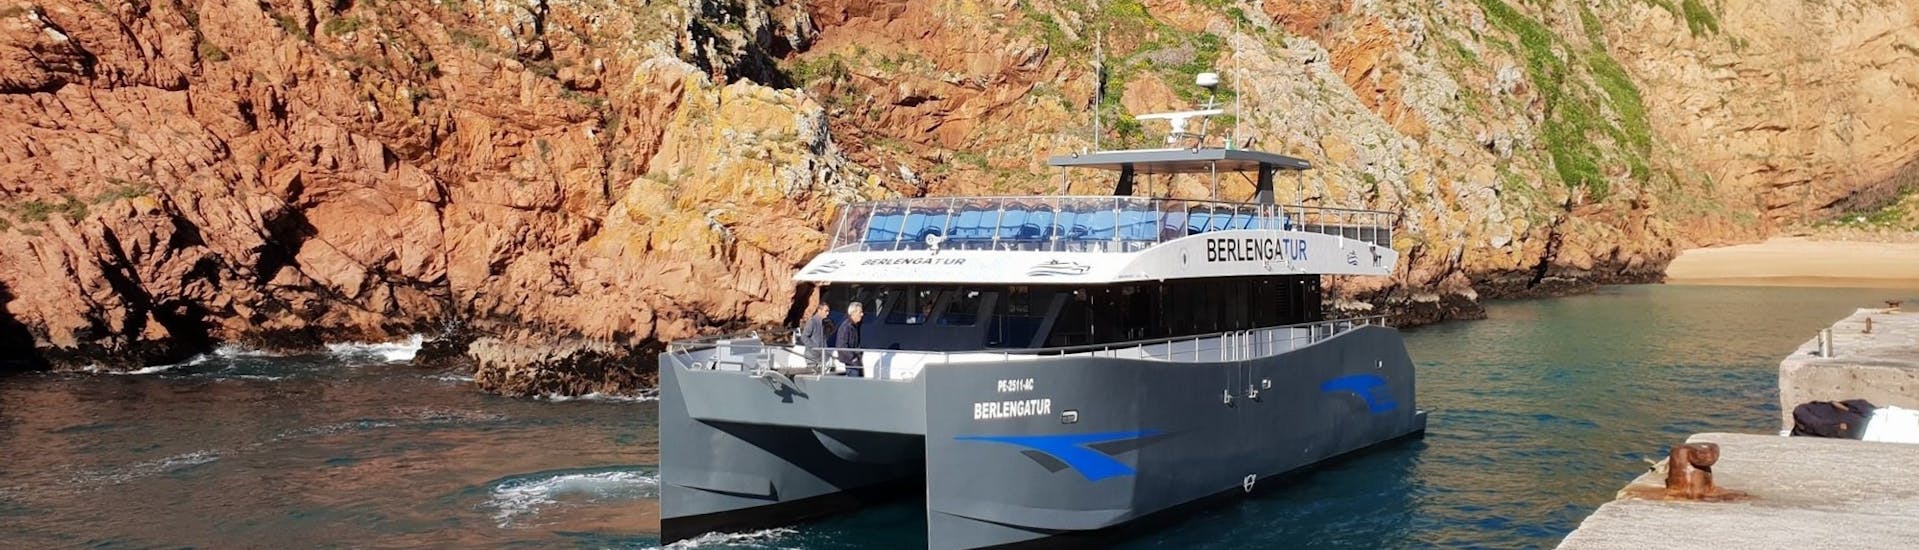 Balade en catamaran Peniche - Archipel des Berlengas avec Baignade & Visites touristiques.